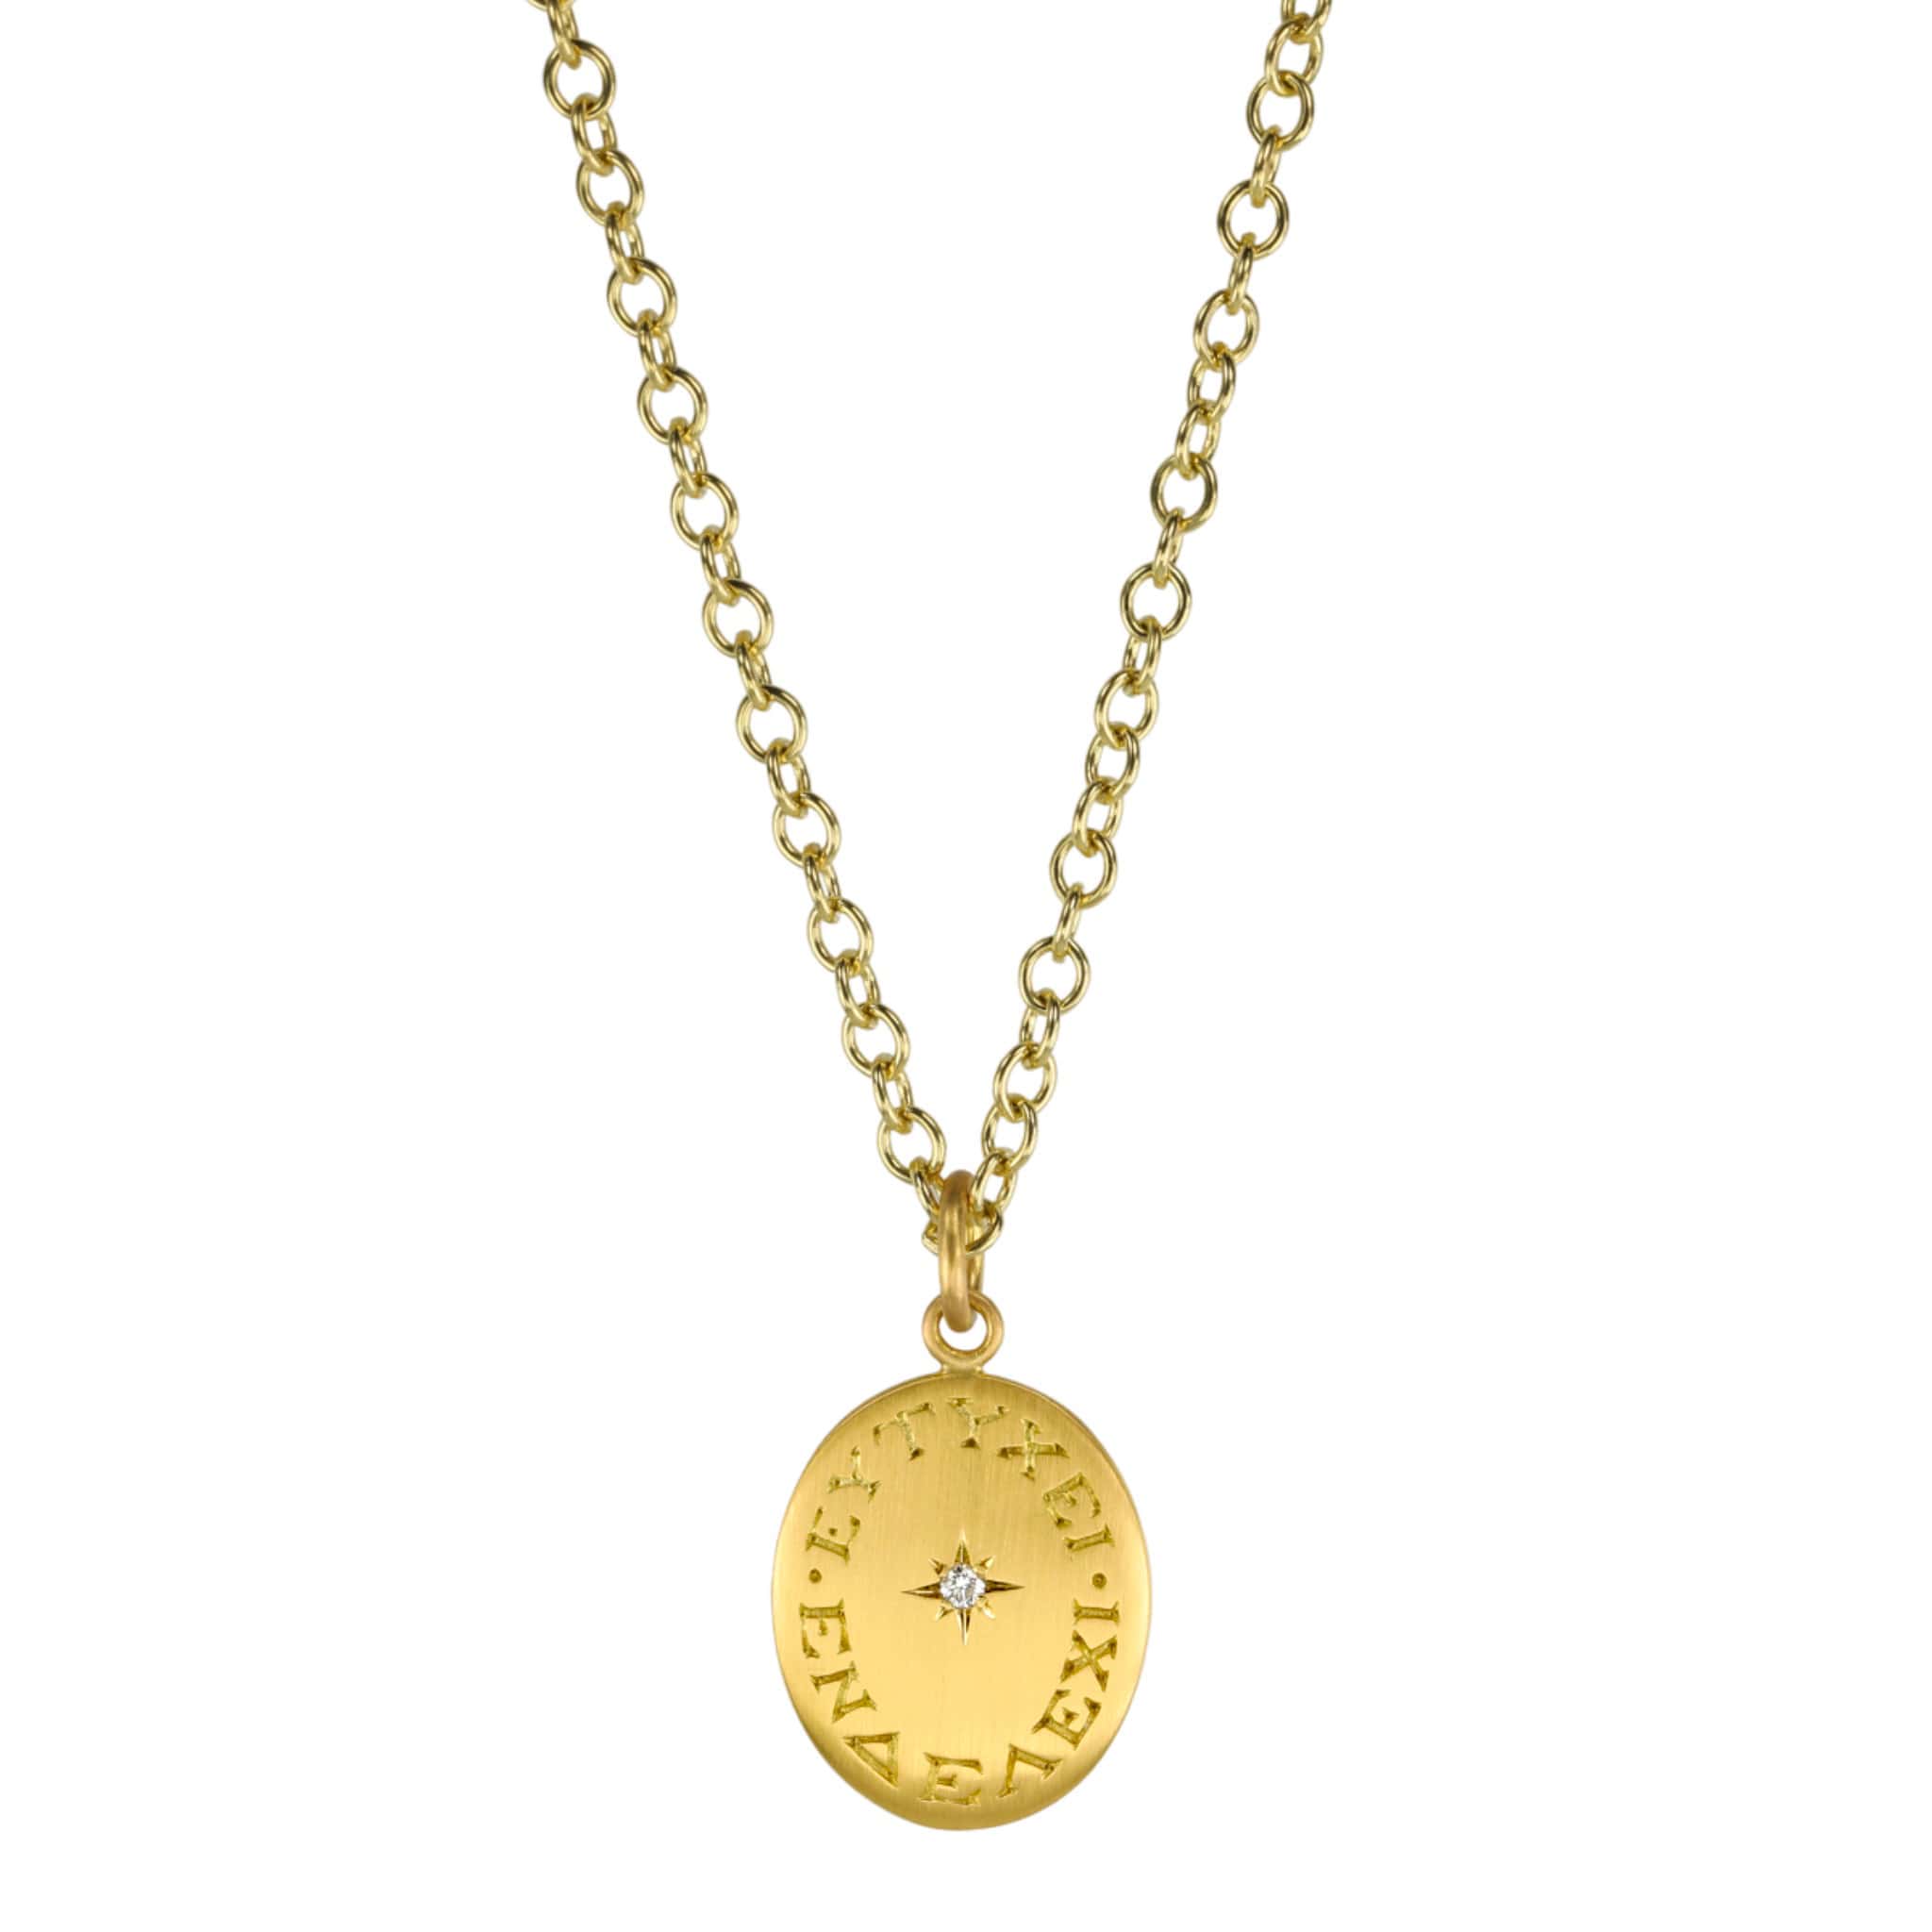 Caroline Ellen 20K Gold Oval Pendant with Ancient Greek Engraving and Star-Set Diamond Center